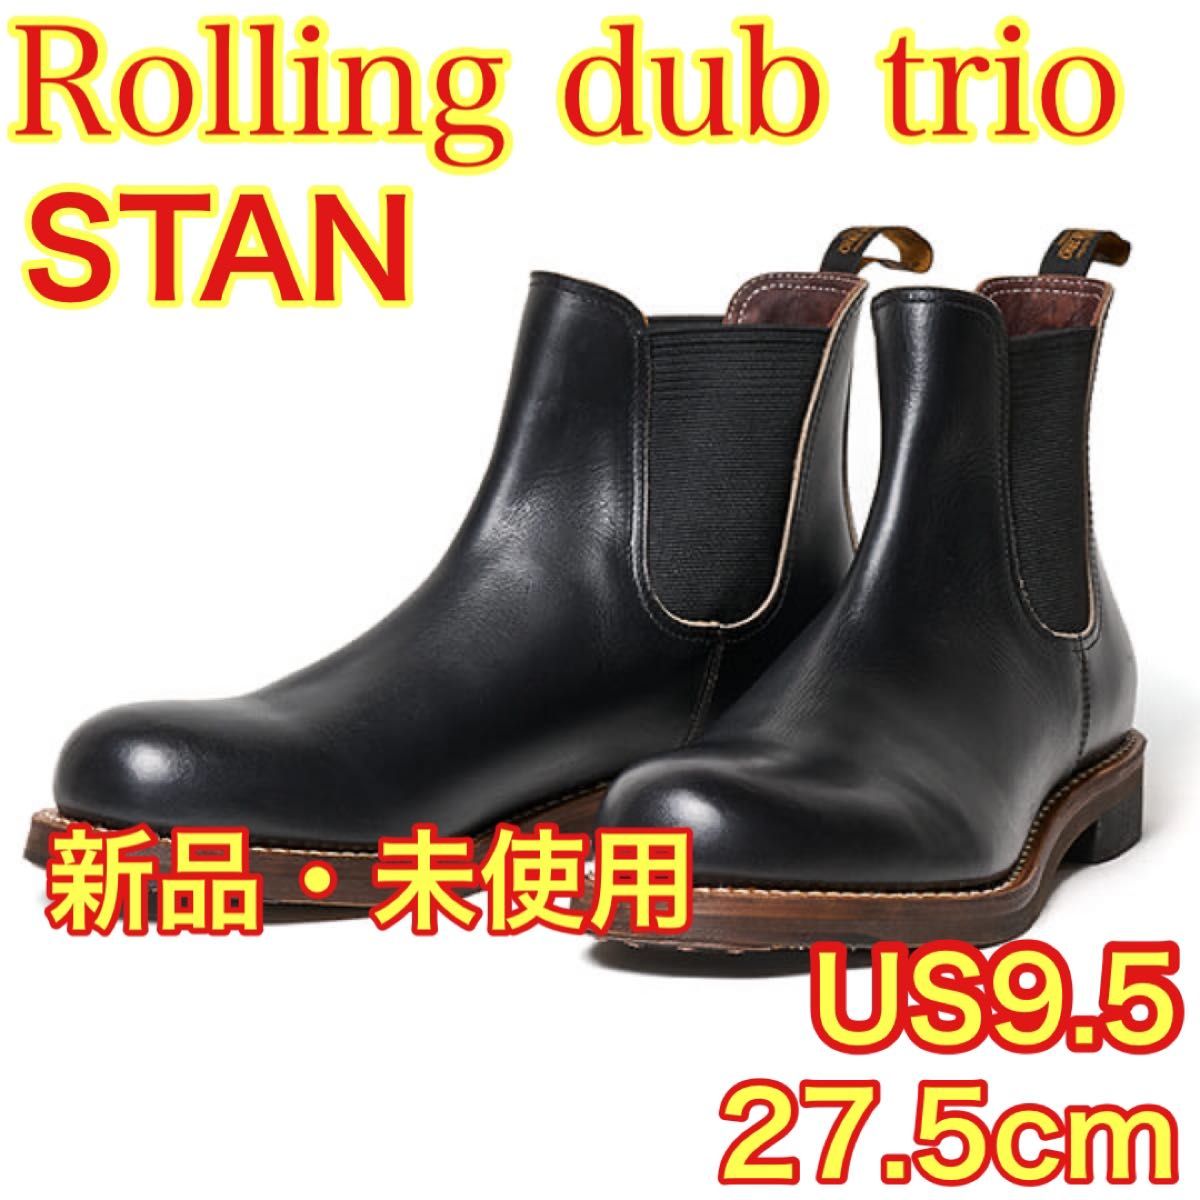 ROLLING DUB TRIO STAN US9 5 27 5cm｜PayPayフリマ